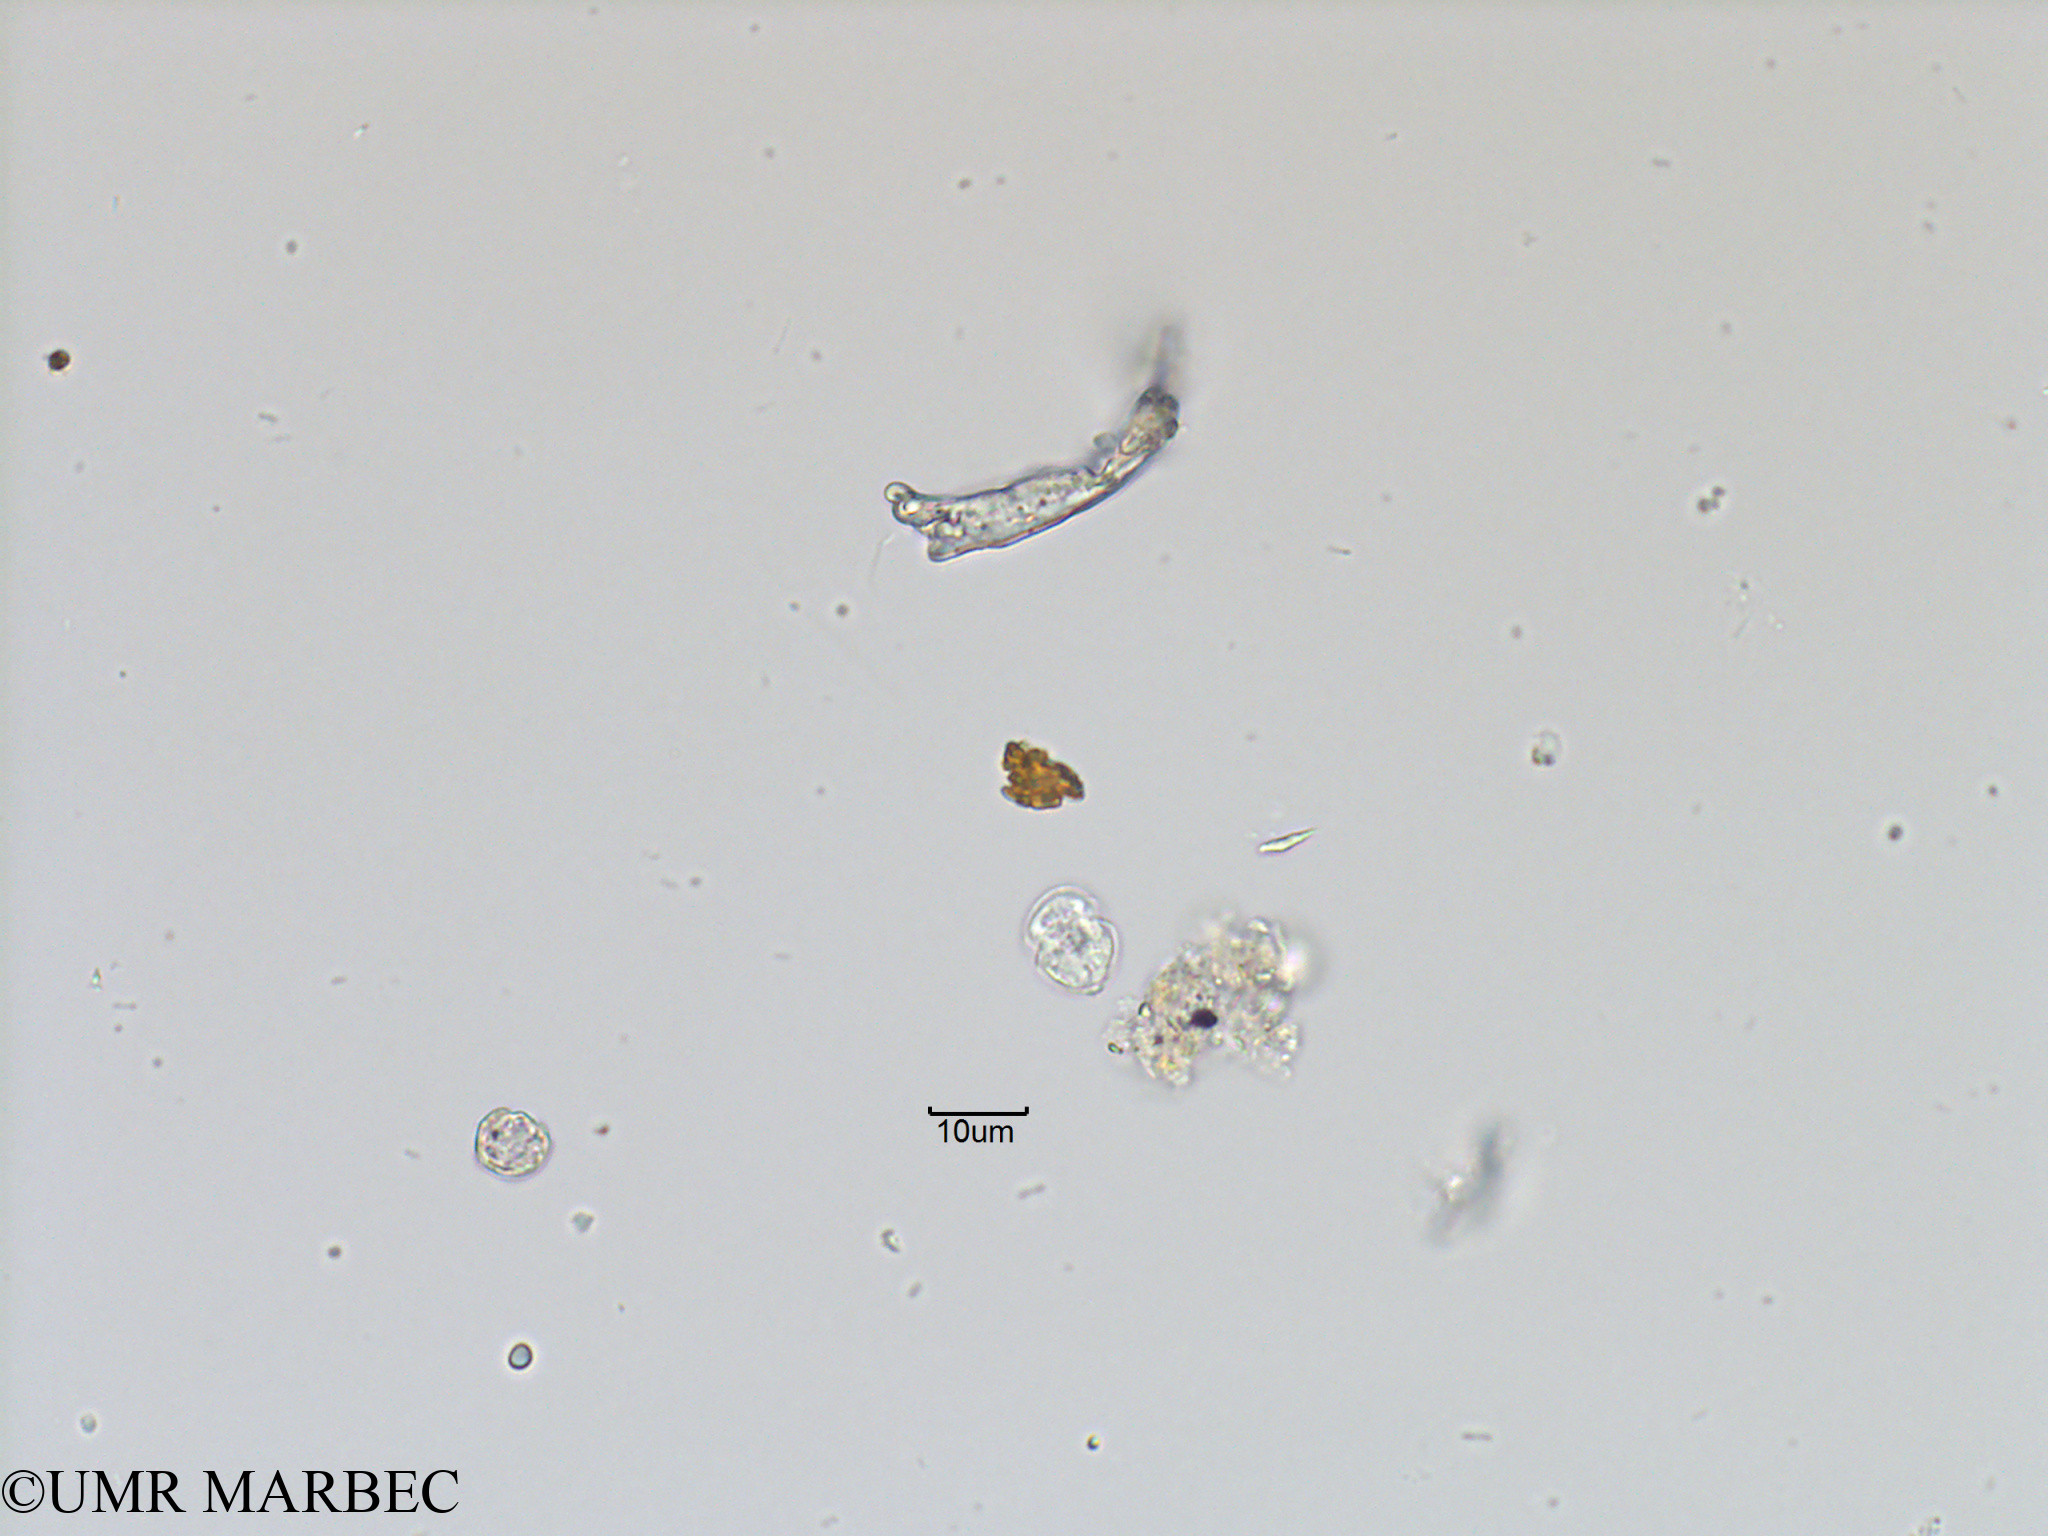 phyto/Bizerte/bizerte_bay/RISCO November 2015/Azadinium spp (Baie_T5-ACW1-Petit dino- cf heterocapsa minima ou azadinium-1).tif(copy).jpg